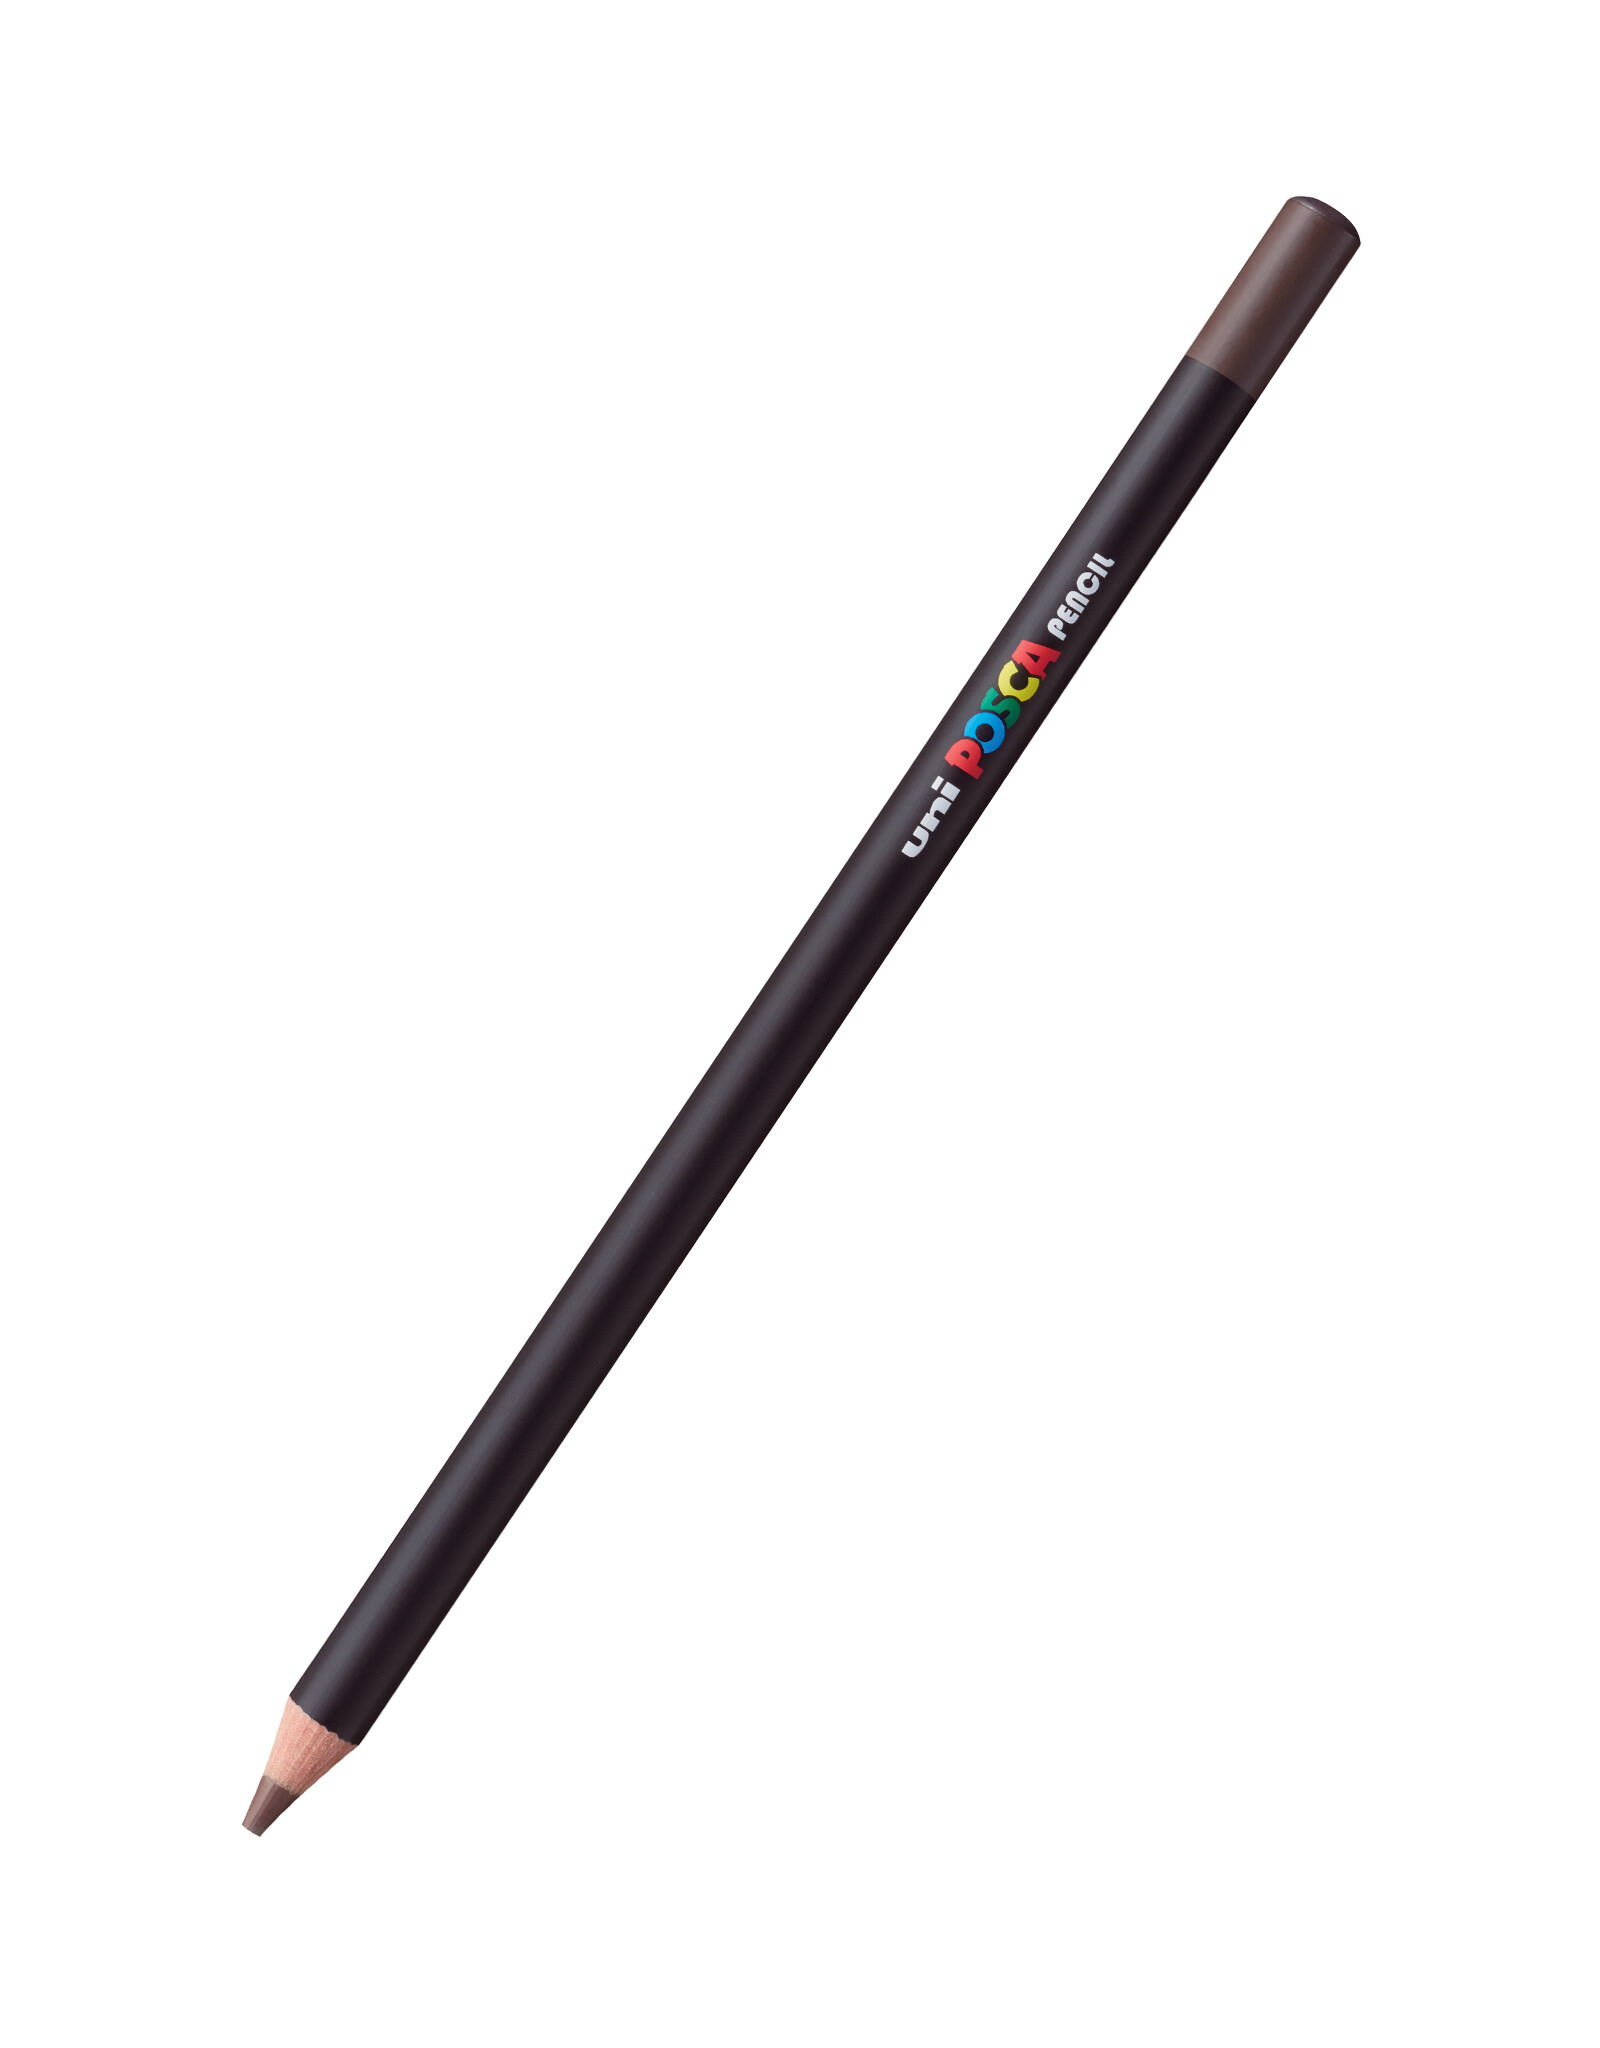 POSCA Uni POSCA Colored Pencil, Dark Brown